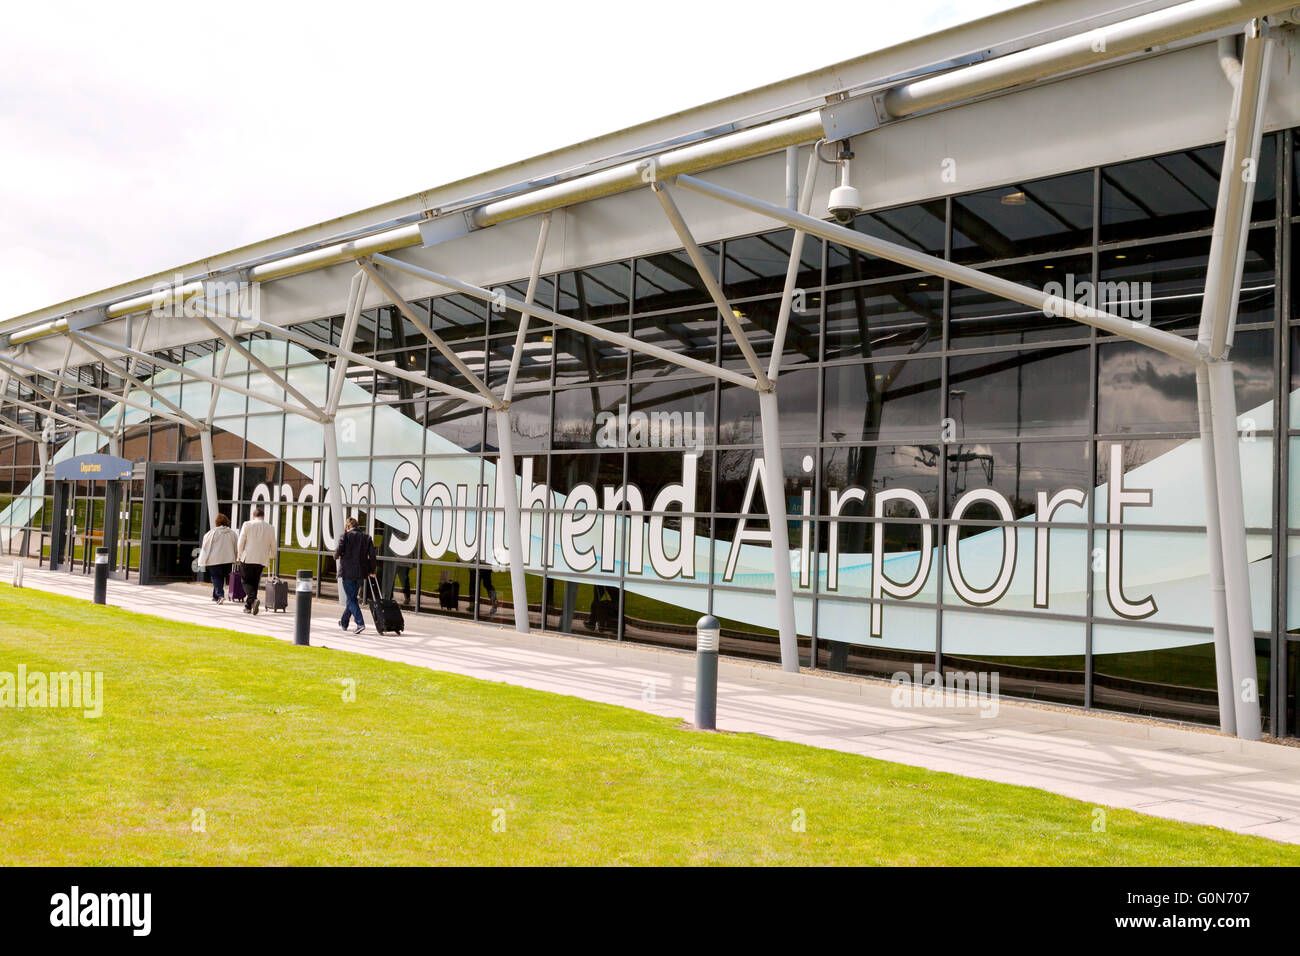 London Southend airport terminal exterior, Southend, Essex UK Stock Photo